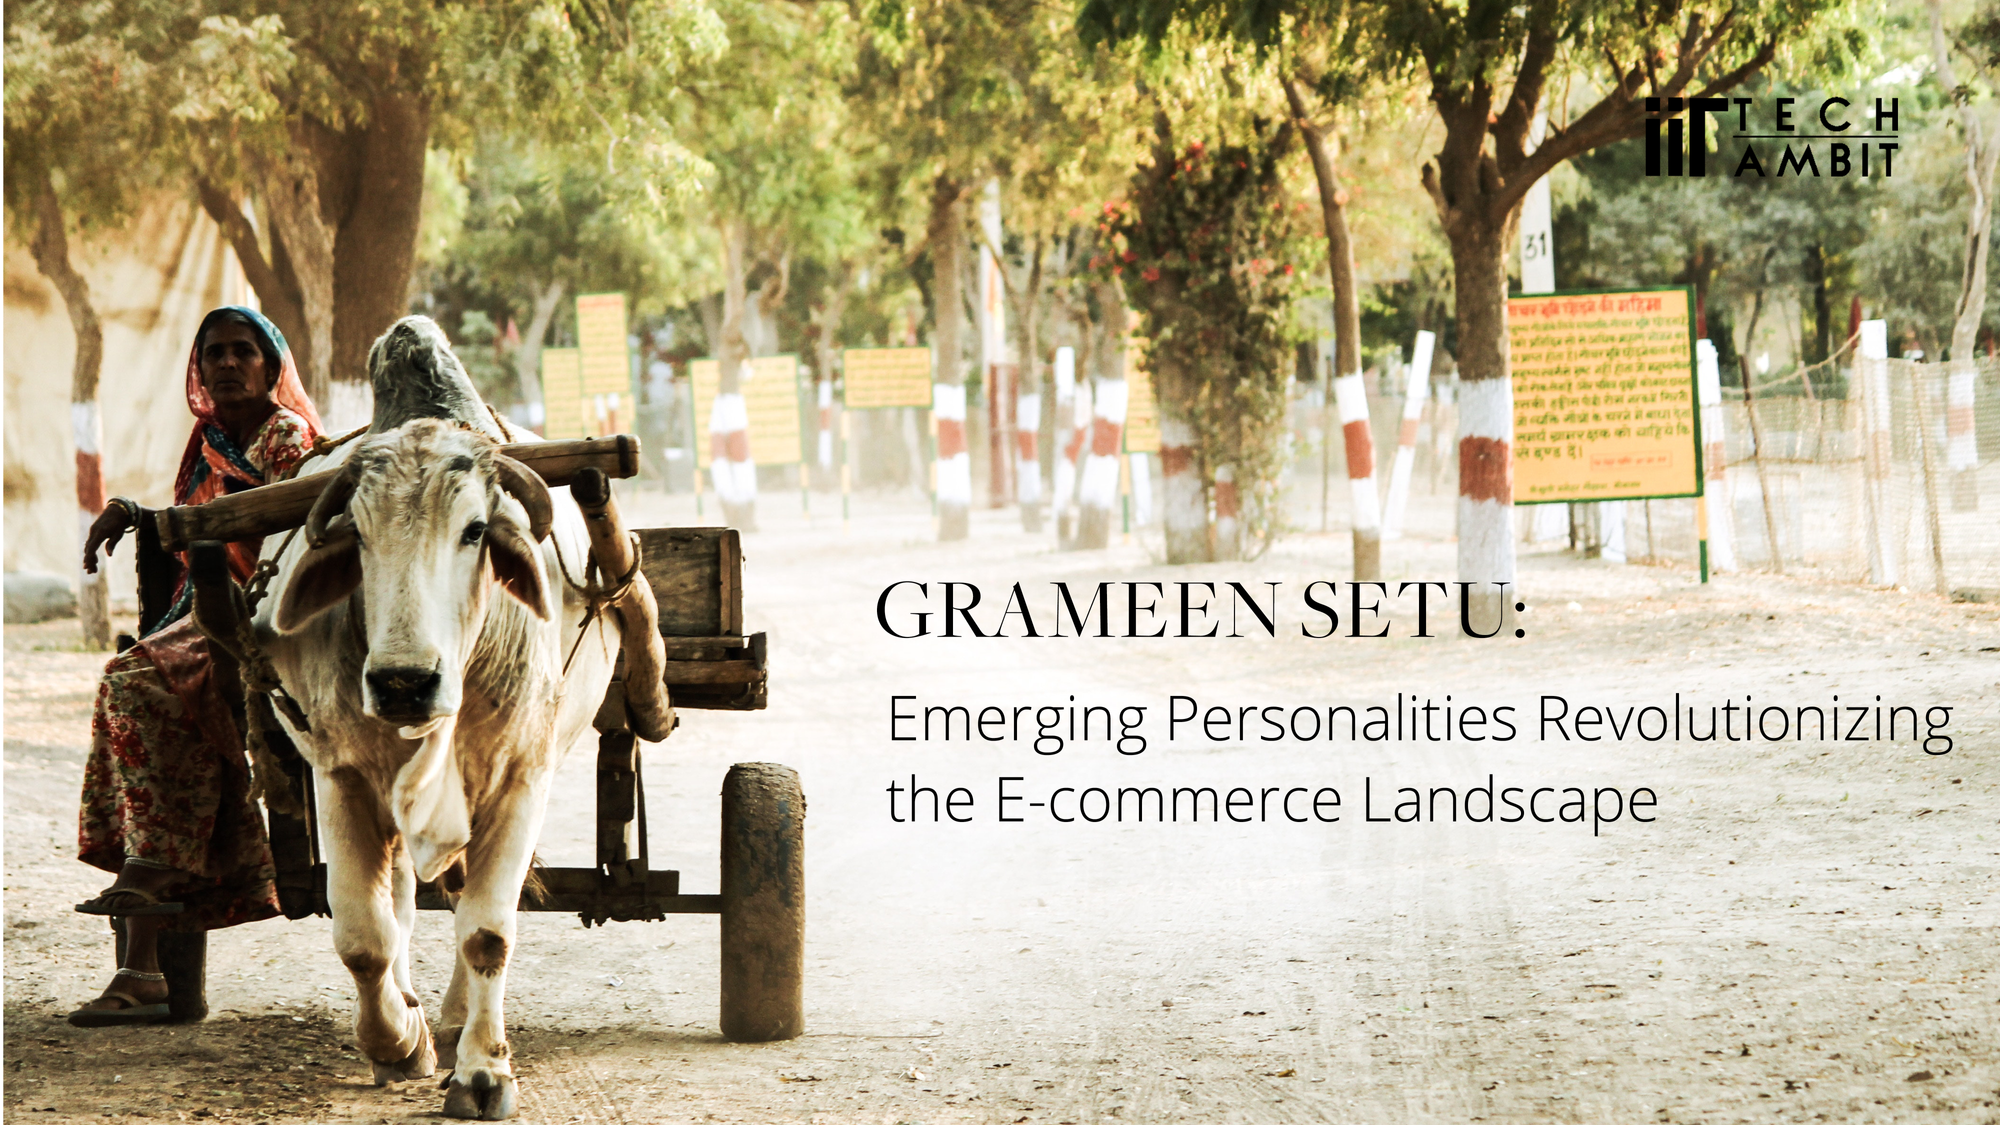 Grameen Setu: Emerging Personalities Revolutionizing the E-commerce Landscape